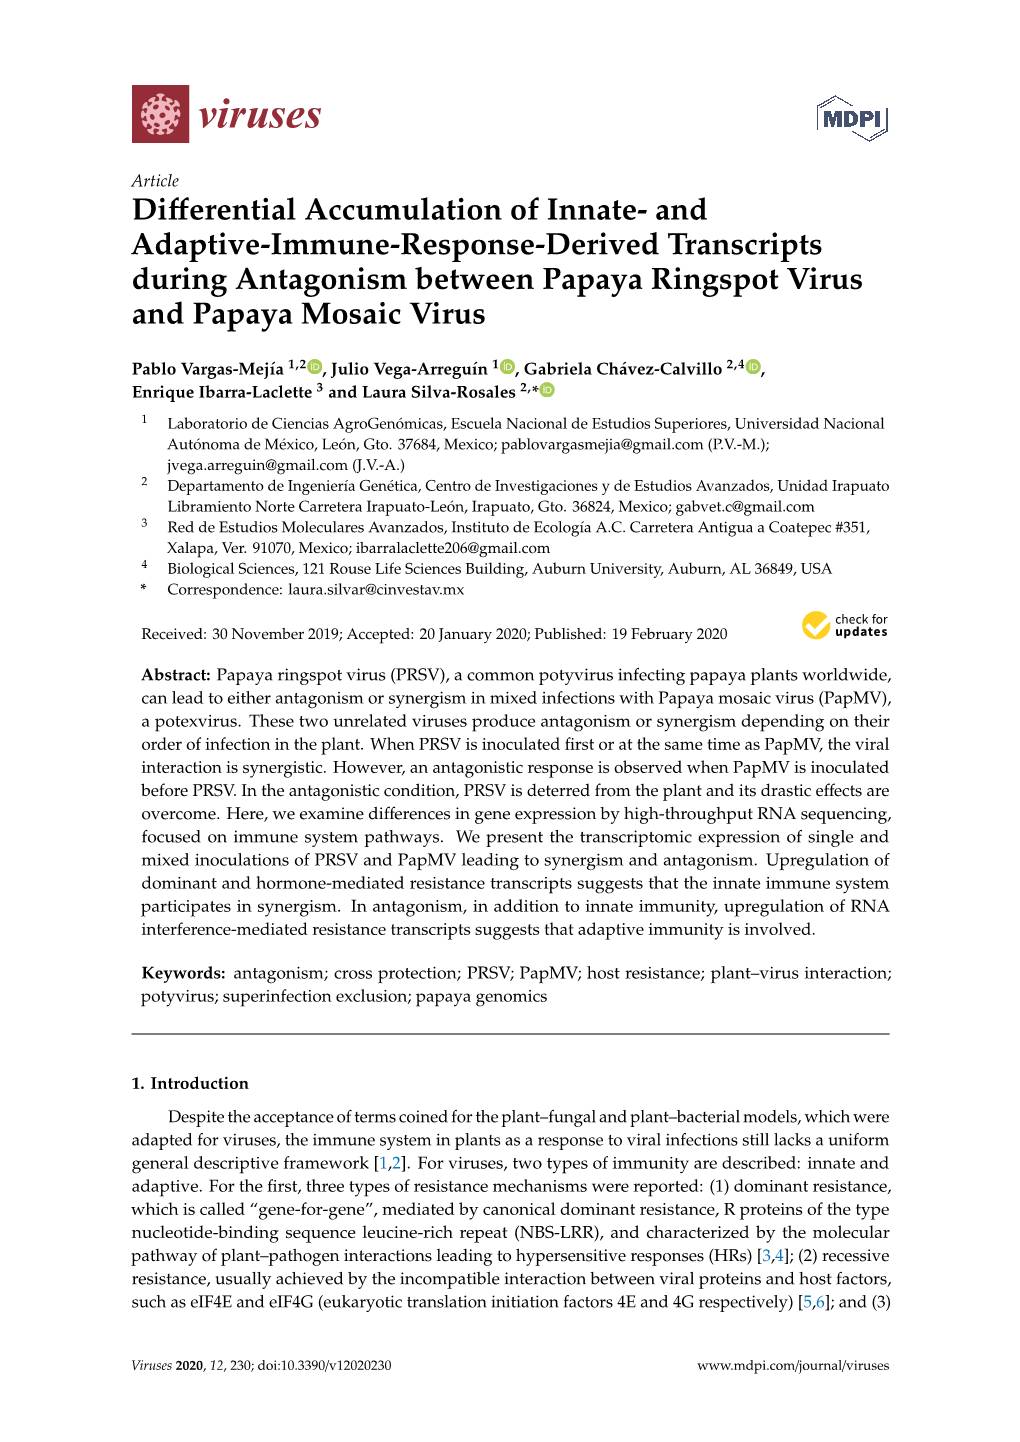 Differential Accumulation of Innate- and Adaptive-Immune-Response